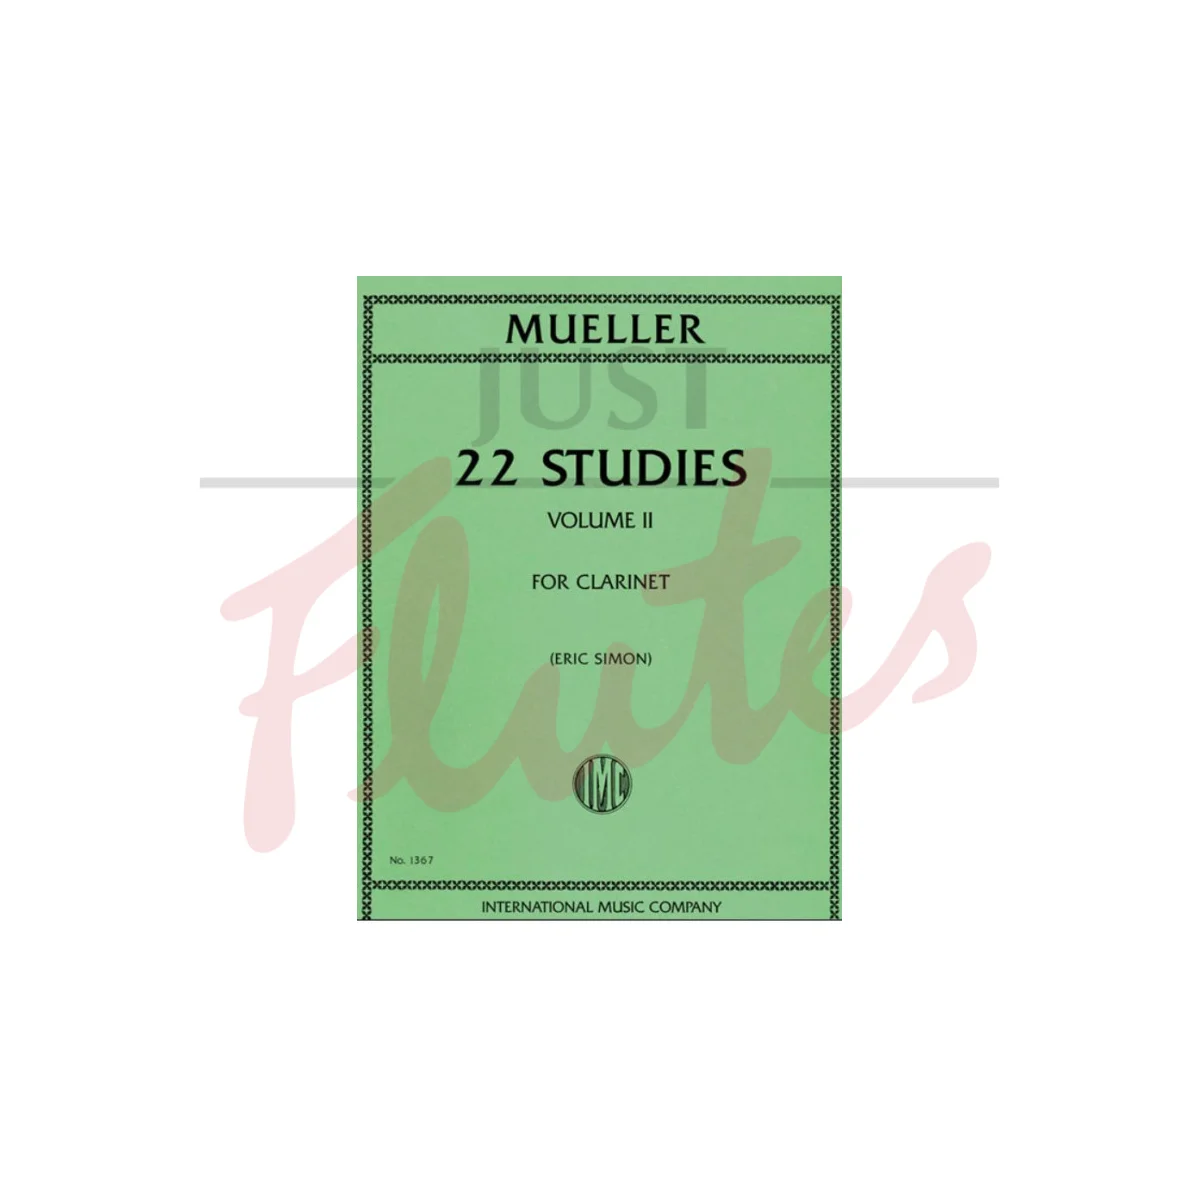 22 Studies for Clarinet, Vol. 2